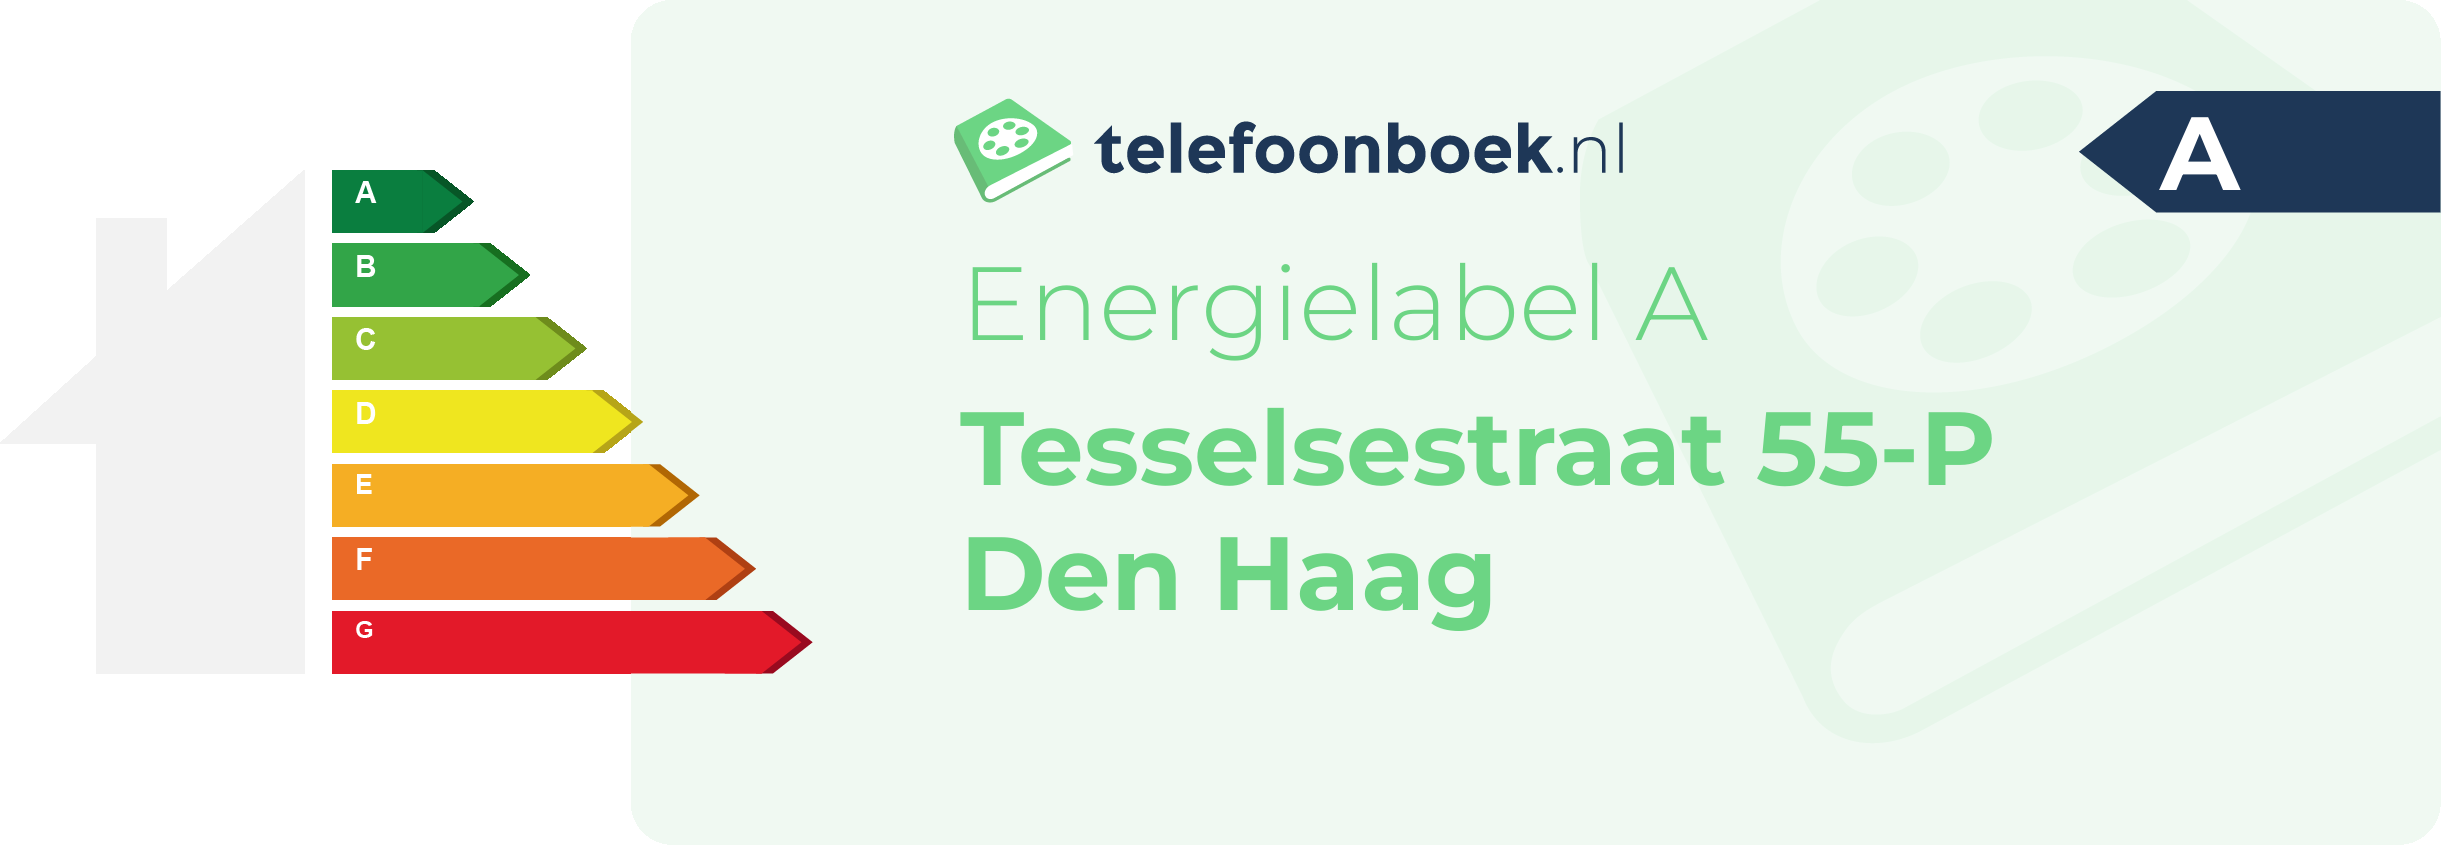 Energielabel Tesselsestraat 55-P Den Haag